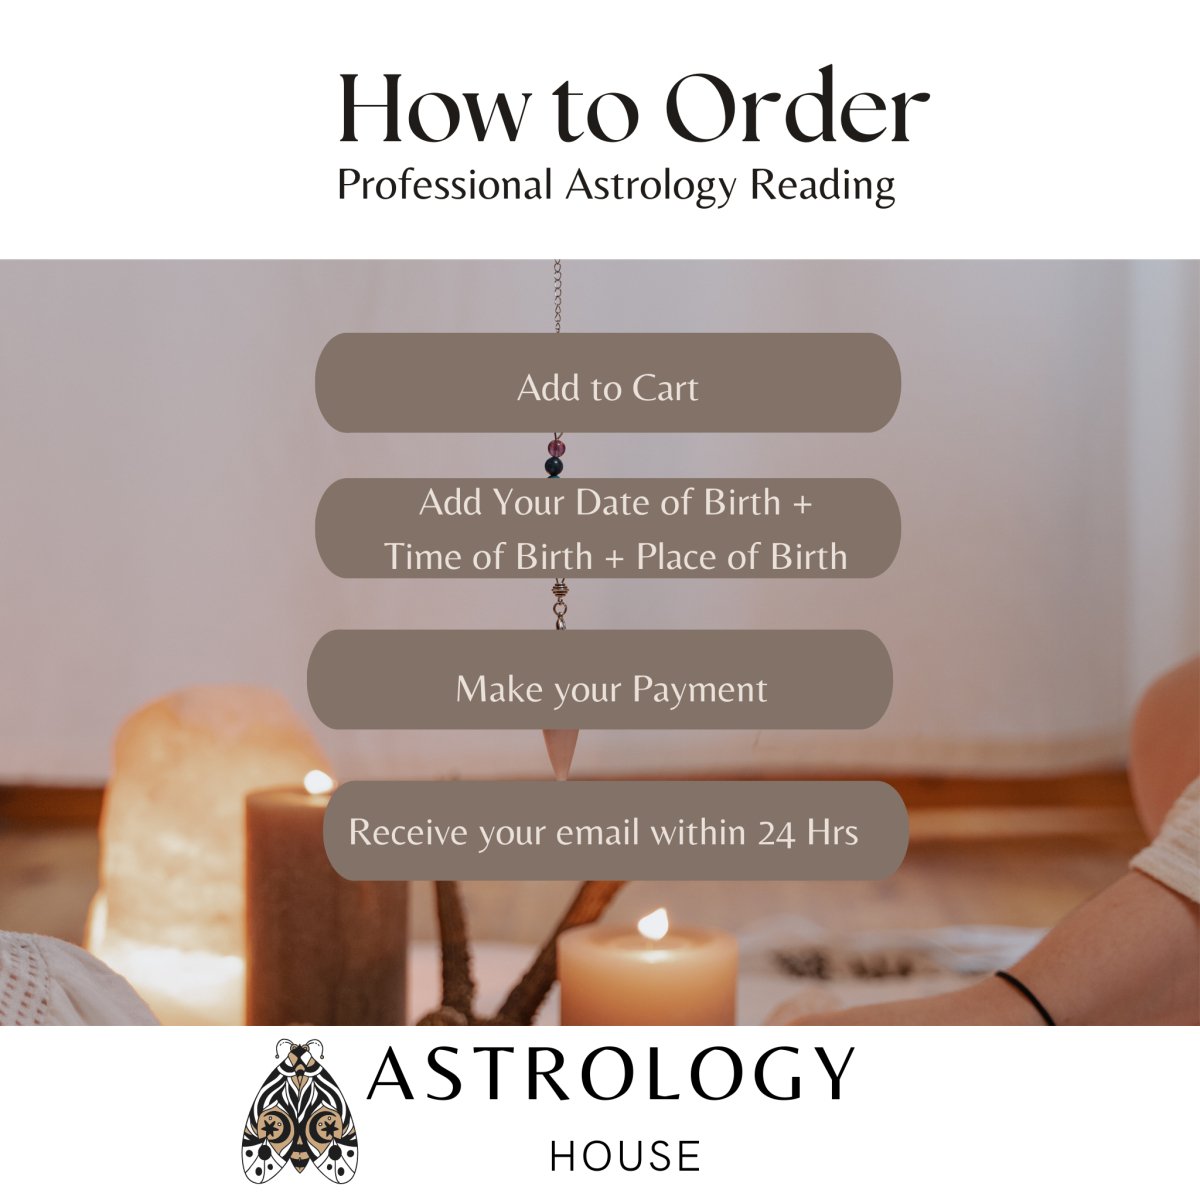 Relationships - The Match Maker Astrology Report - Digital Download - Astrology House